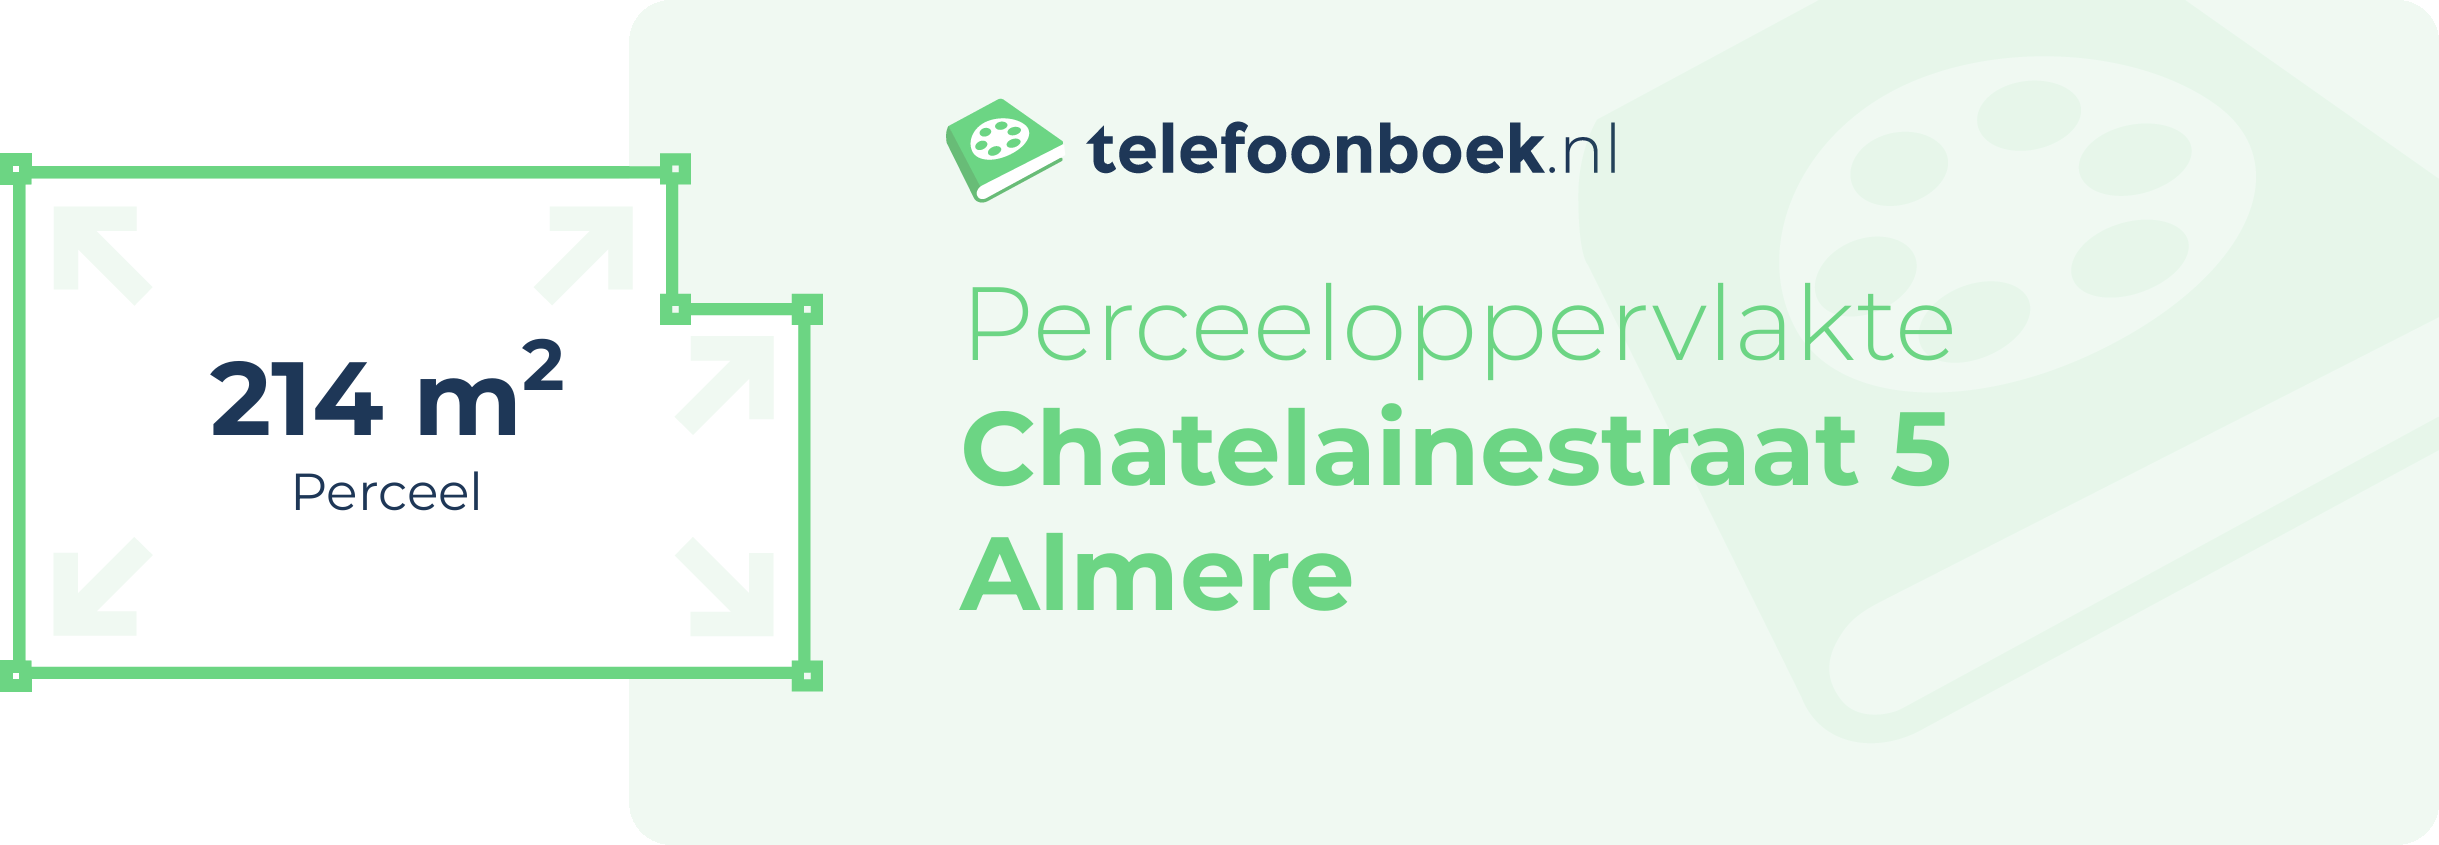 Perceeloppervlakte Chatelainestraat 5 Almere